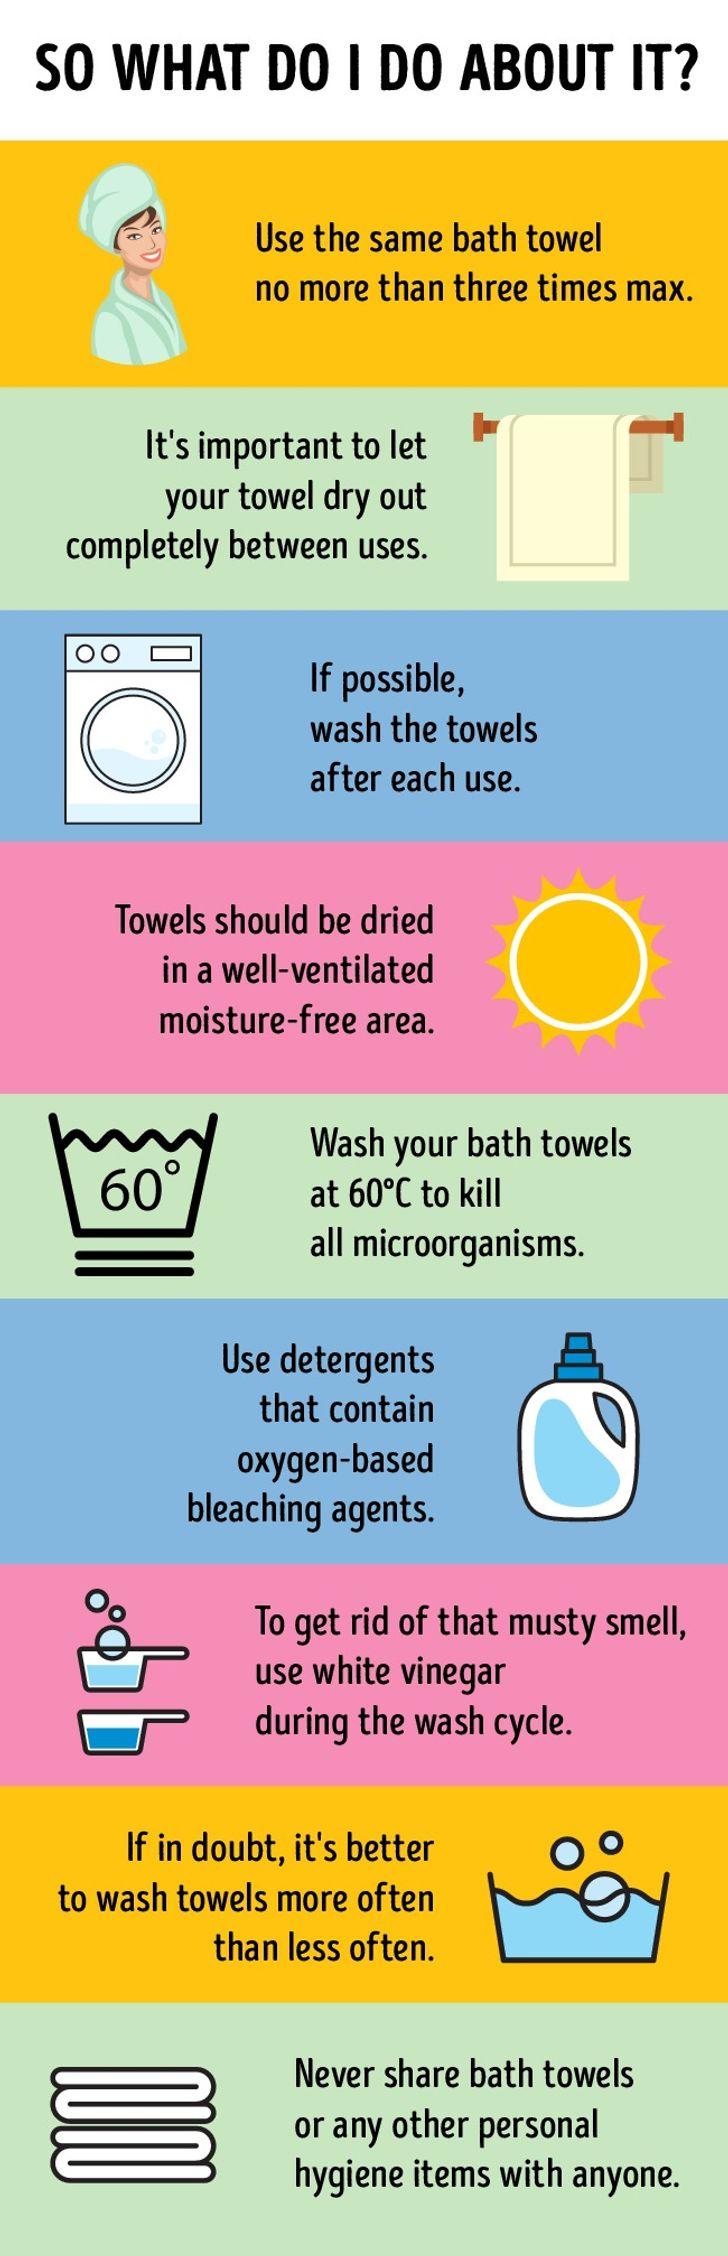 How often should you wash bath towels?